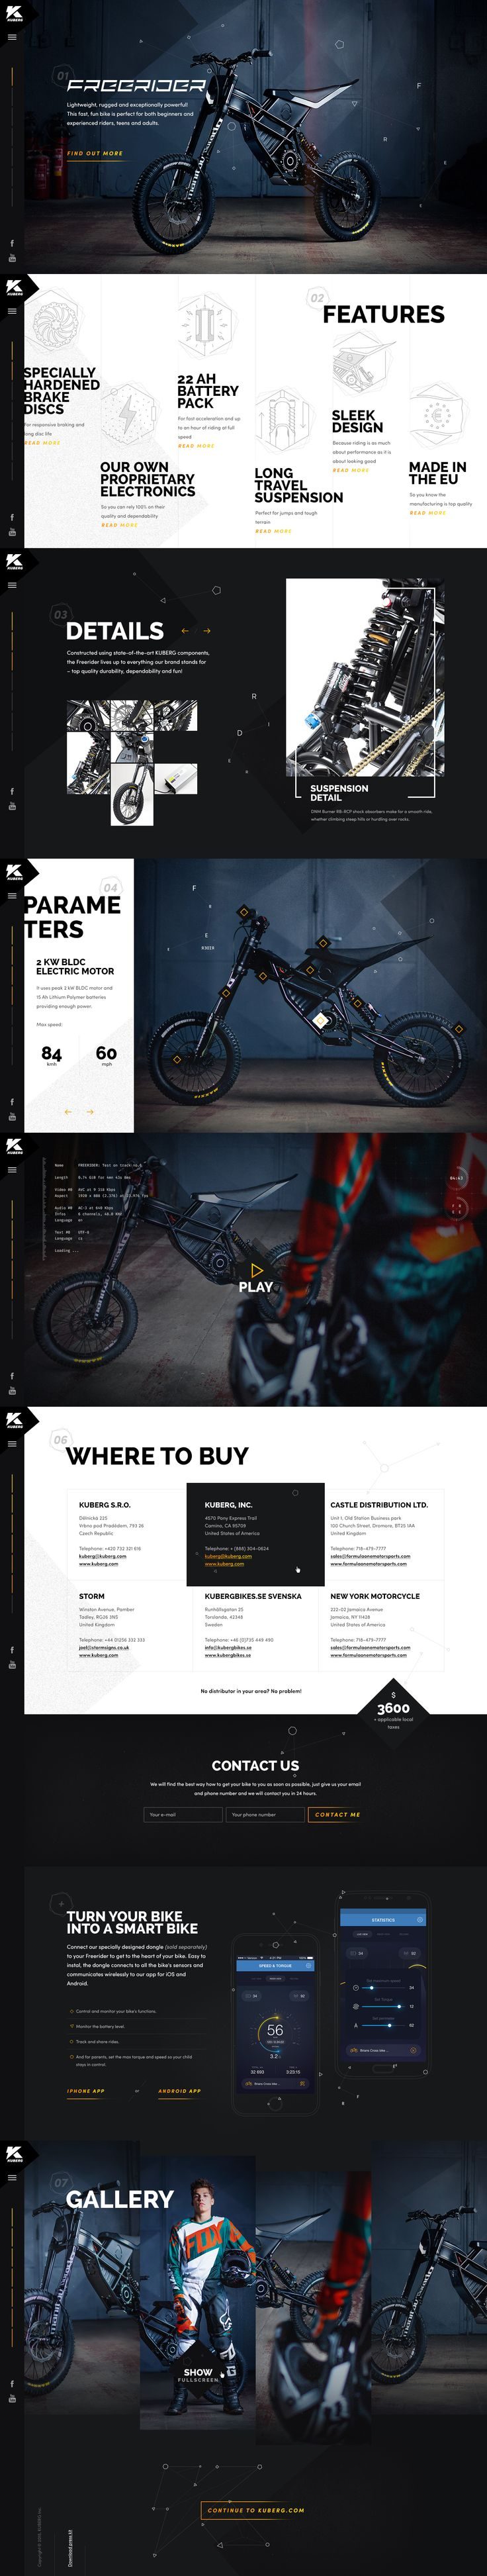 Kuberg – Free Rider website by Michael Čečetka